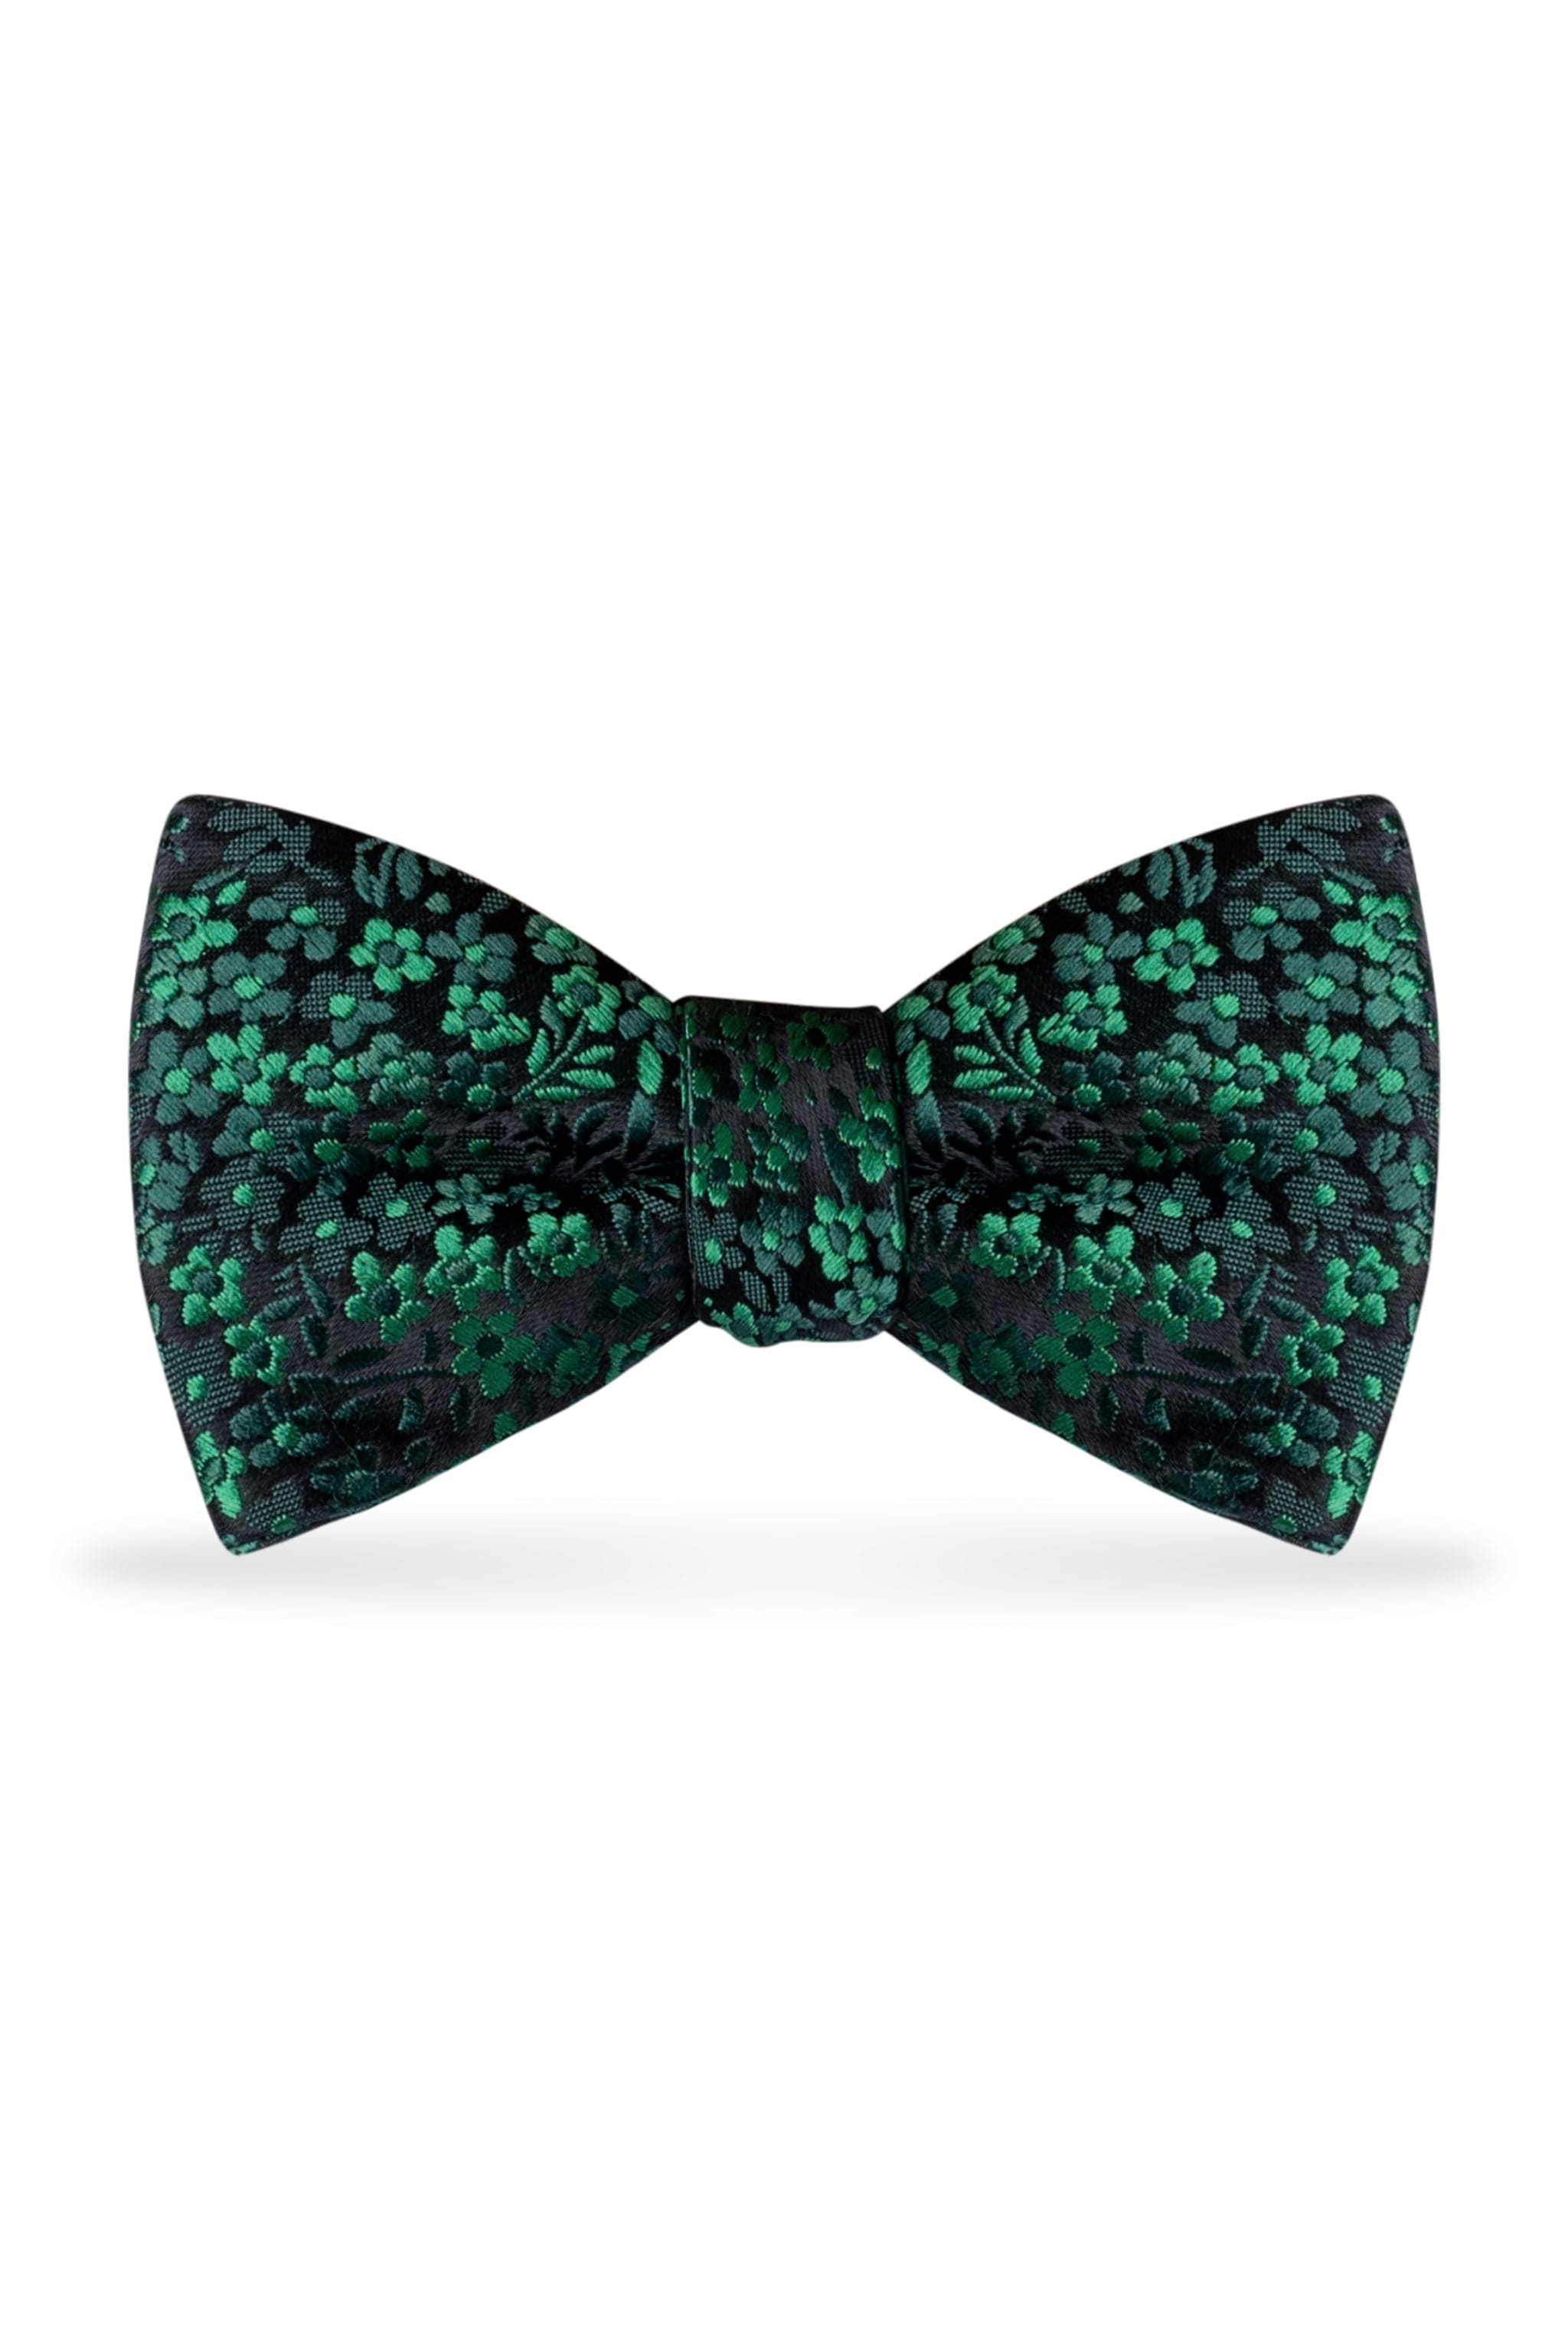 Floral Emerald Bow Tie